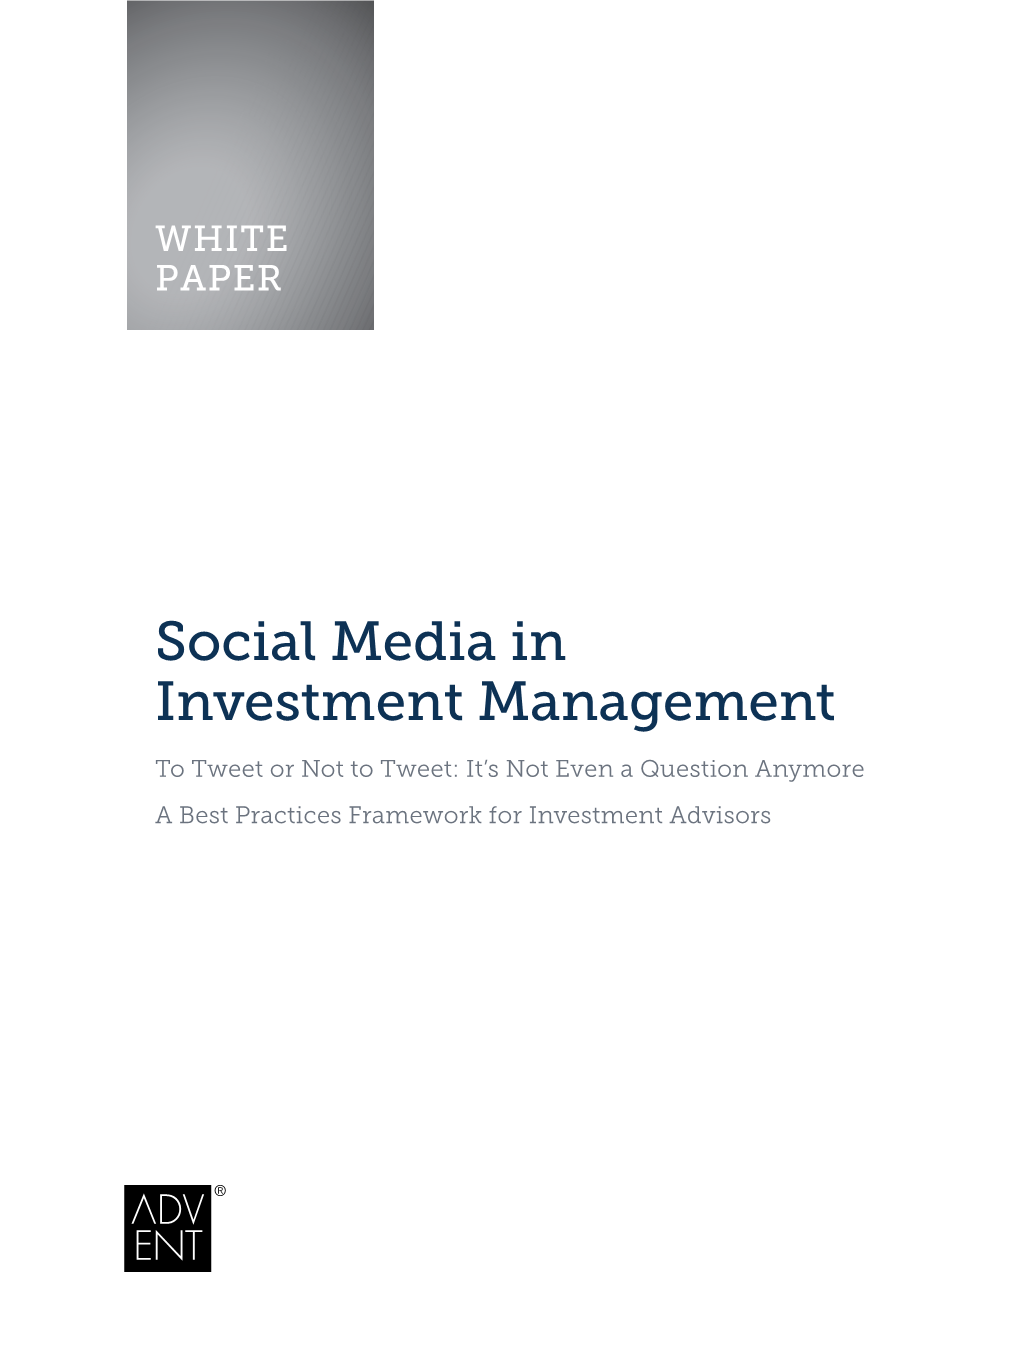 Social Media in Investment Management